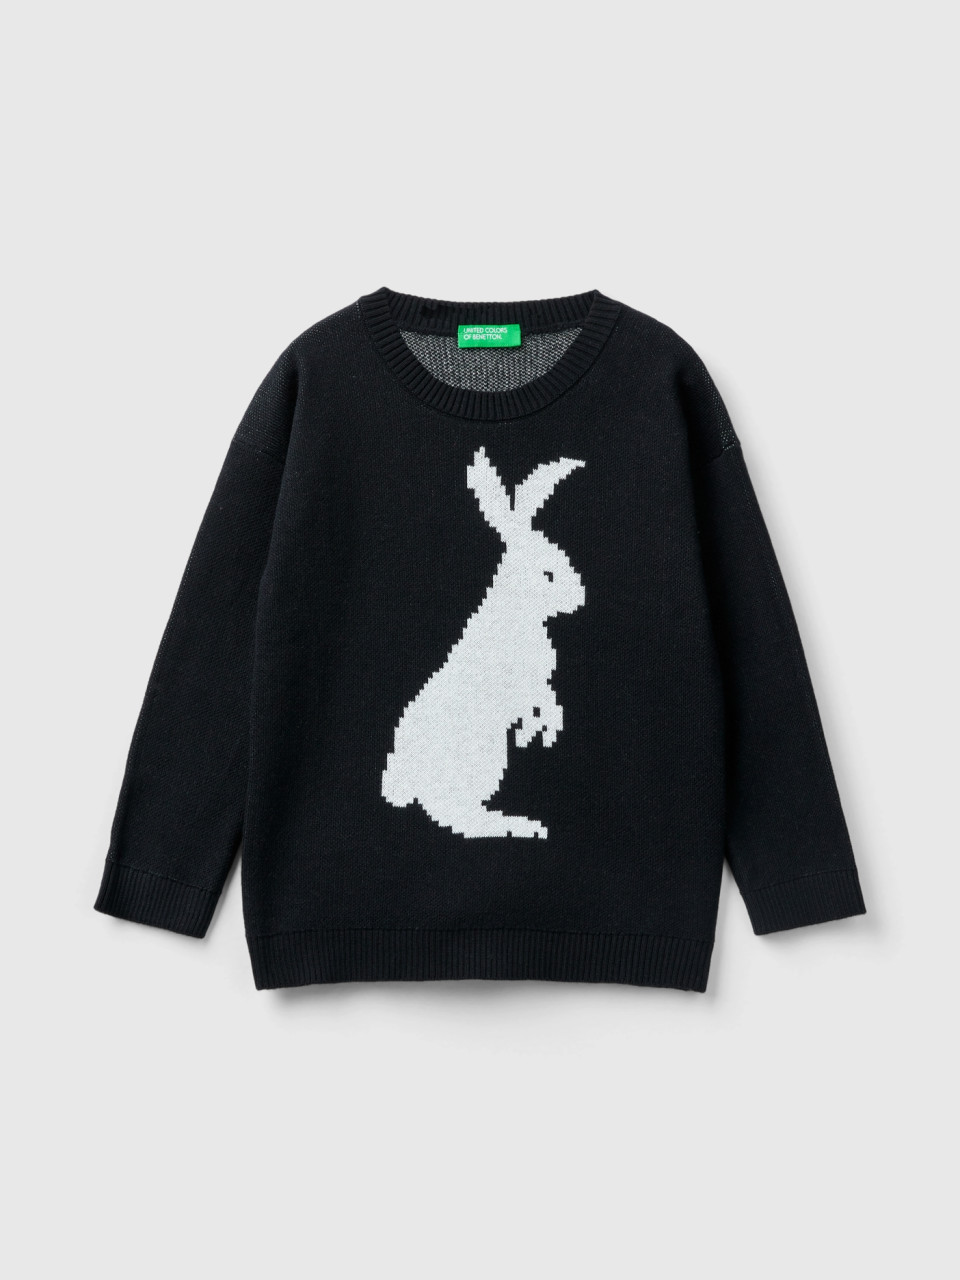 Benetton, Sweater With Bunny Design, Black, Kids